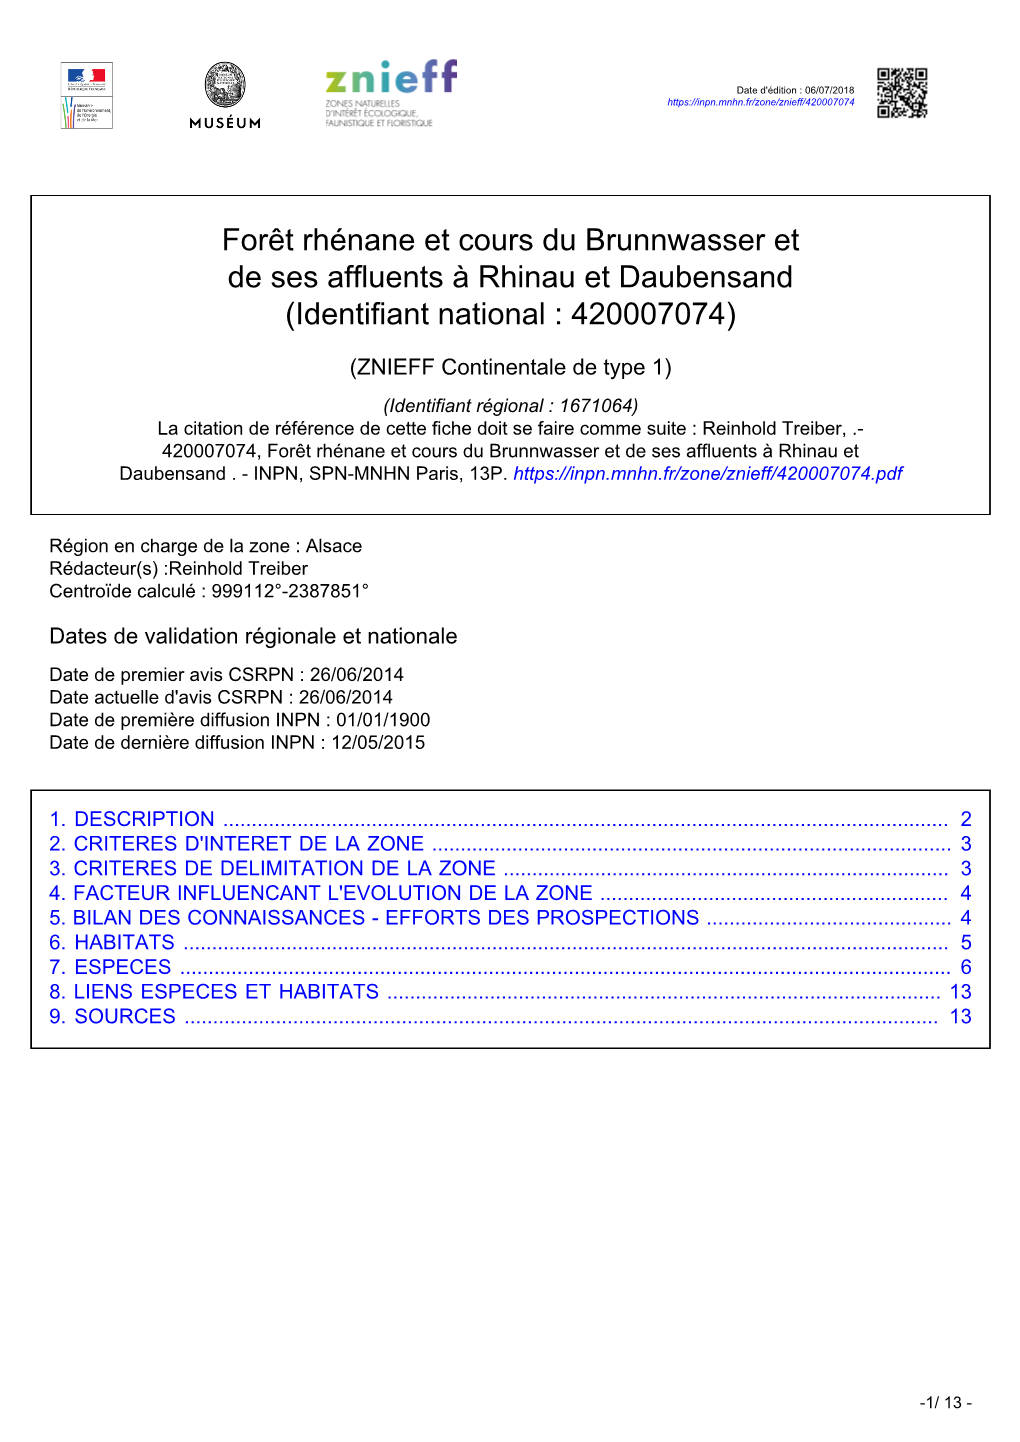 Forêt Rhénane Et Cours Du Brunnwasser Et De Ses Affluents À Rhinau Et Daubensand (Identifiant National : 420007074)